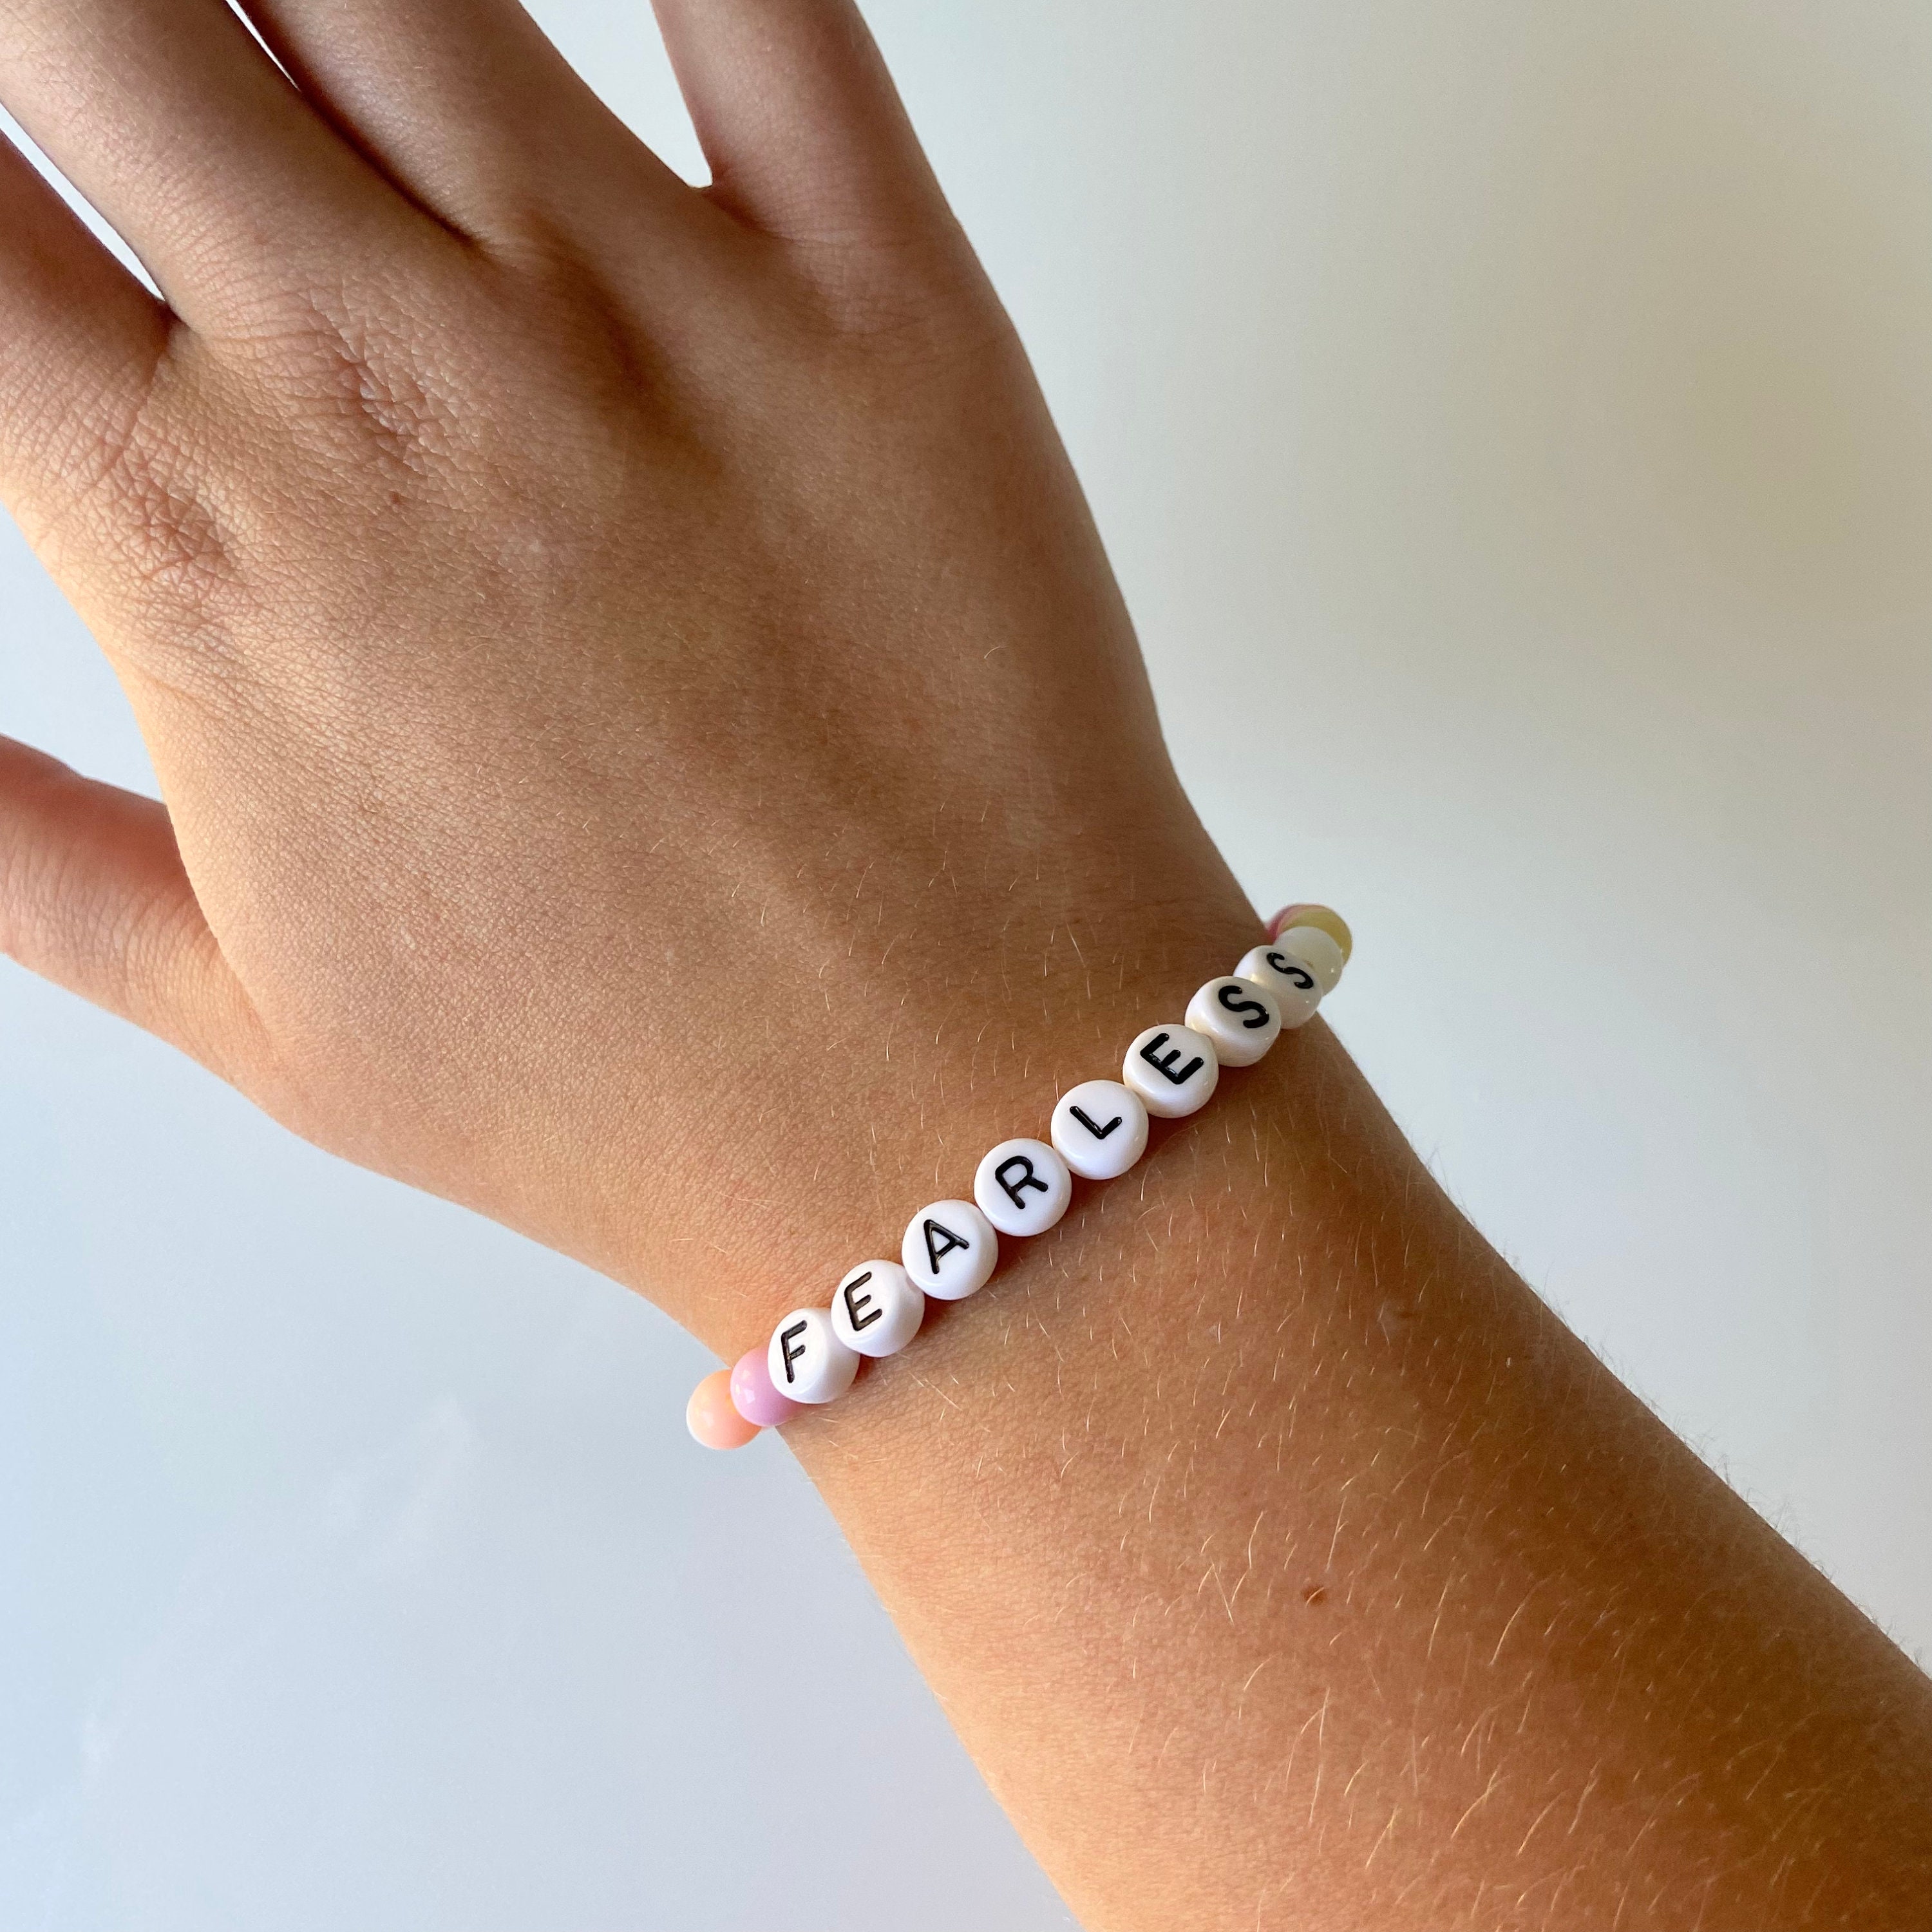 Jual taylor swift inspired bracelet, by beads bakery